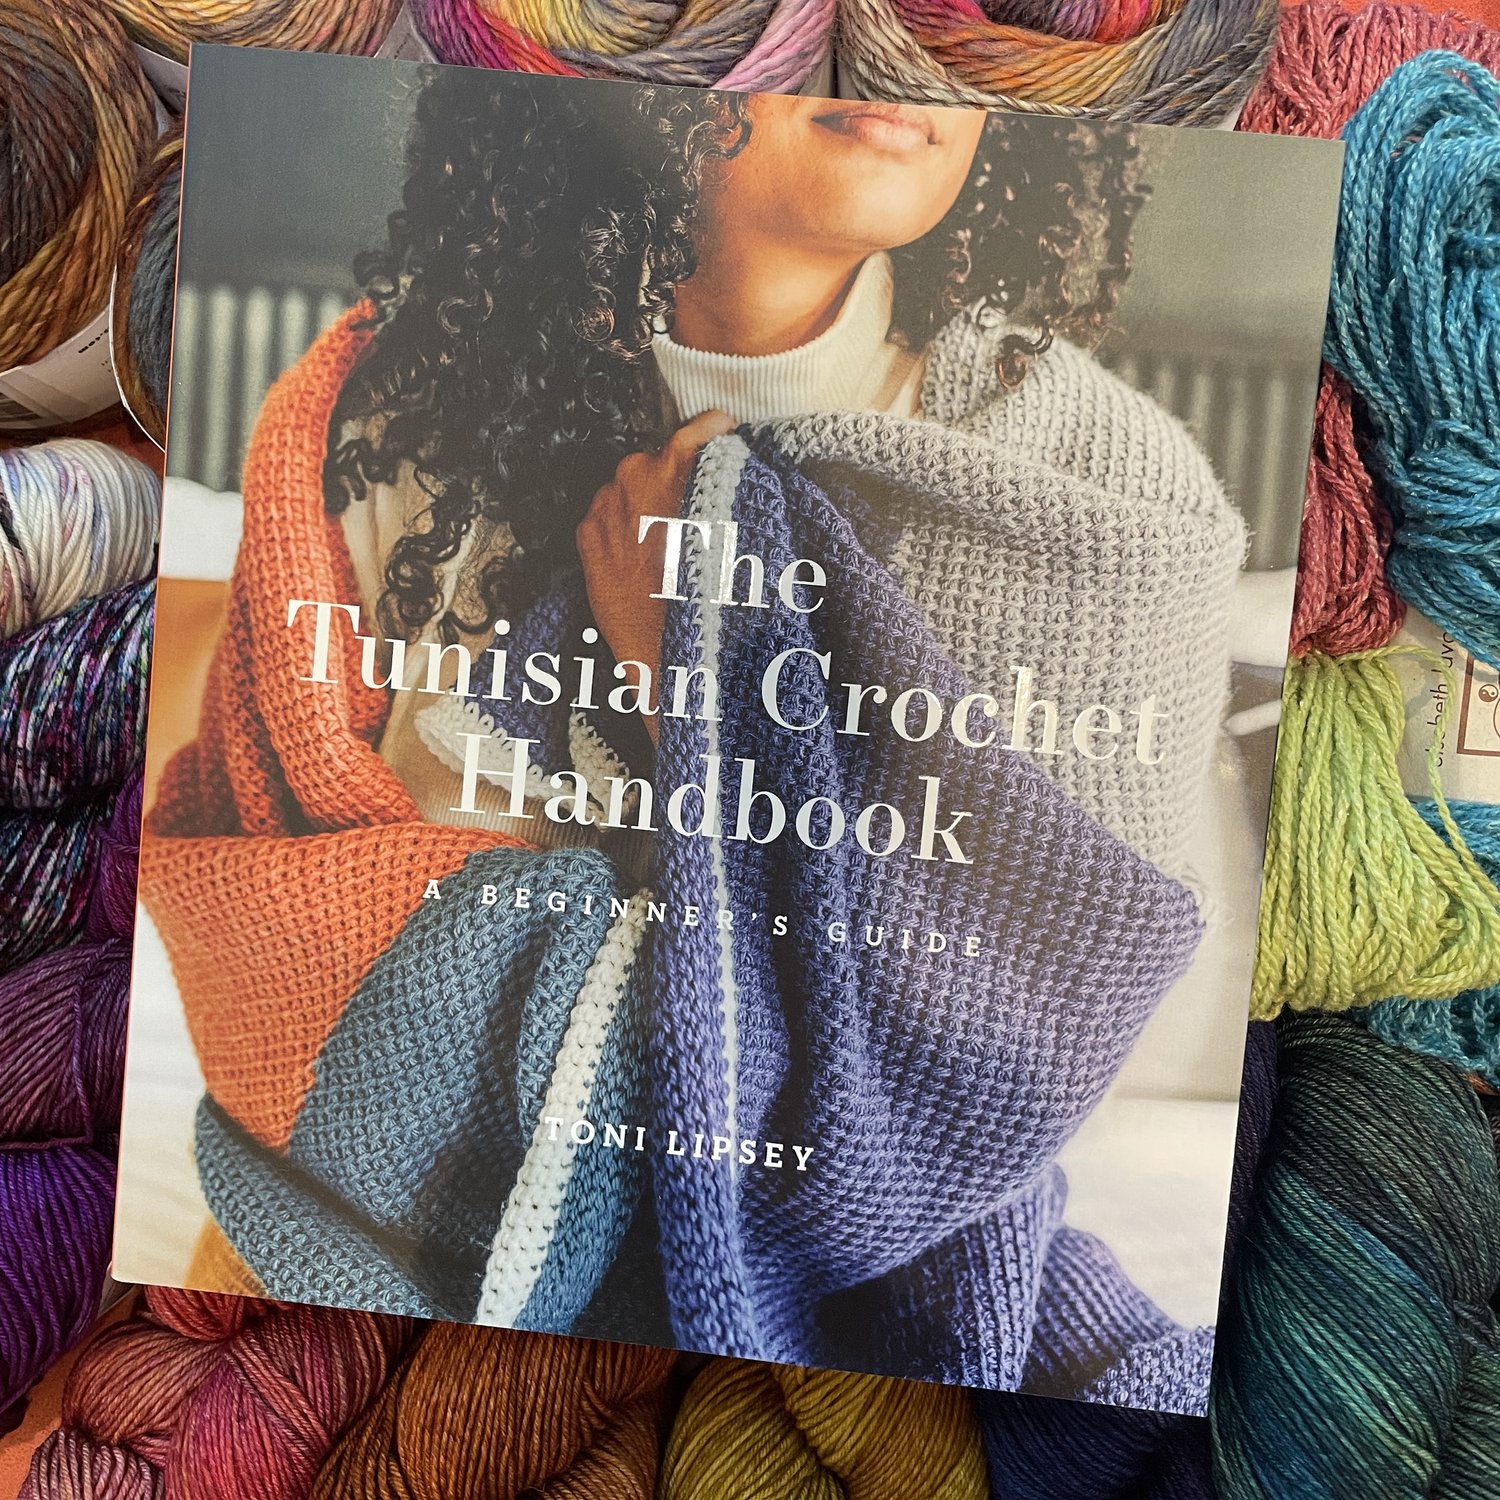 The Tunisian Crochet Handbook: A Beginner's Guide by Toni Lipsey -  Sister-Arts Studio Chicago — Sister-Arts Studio